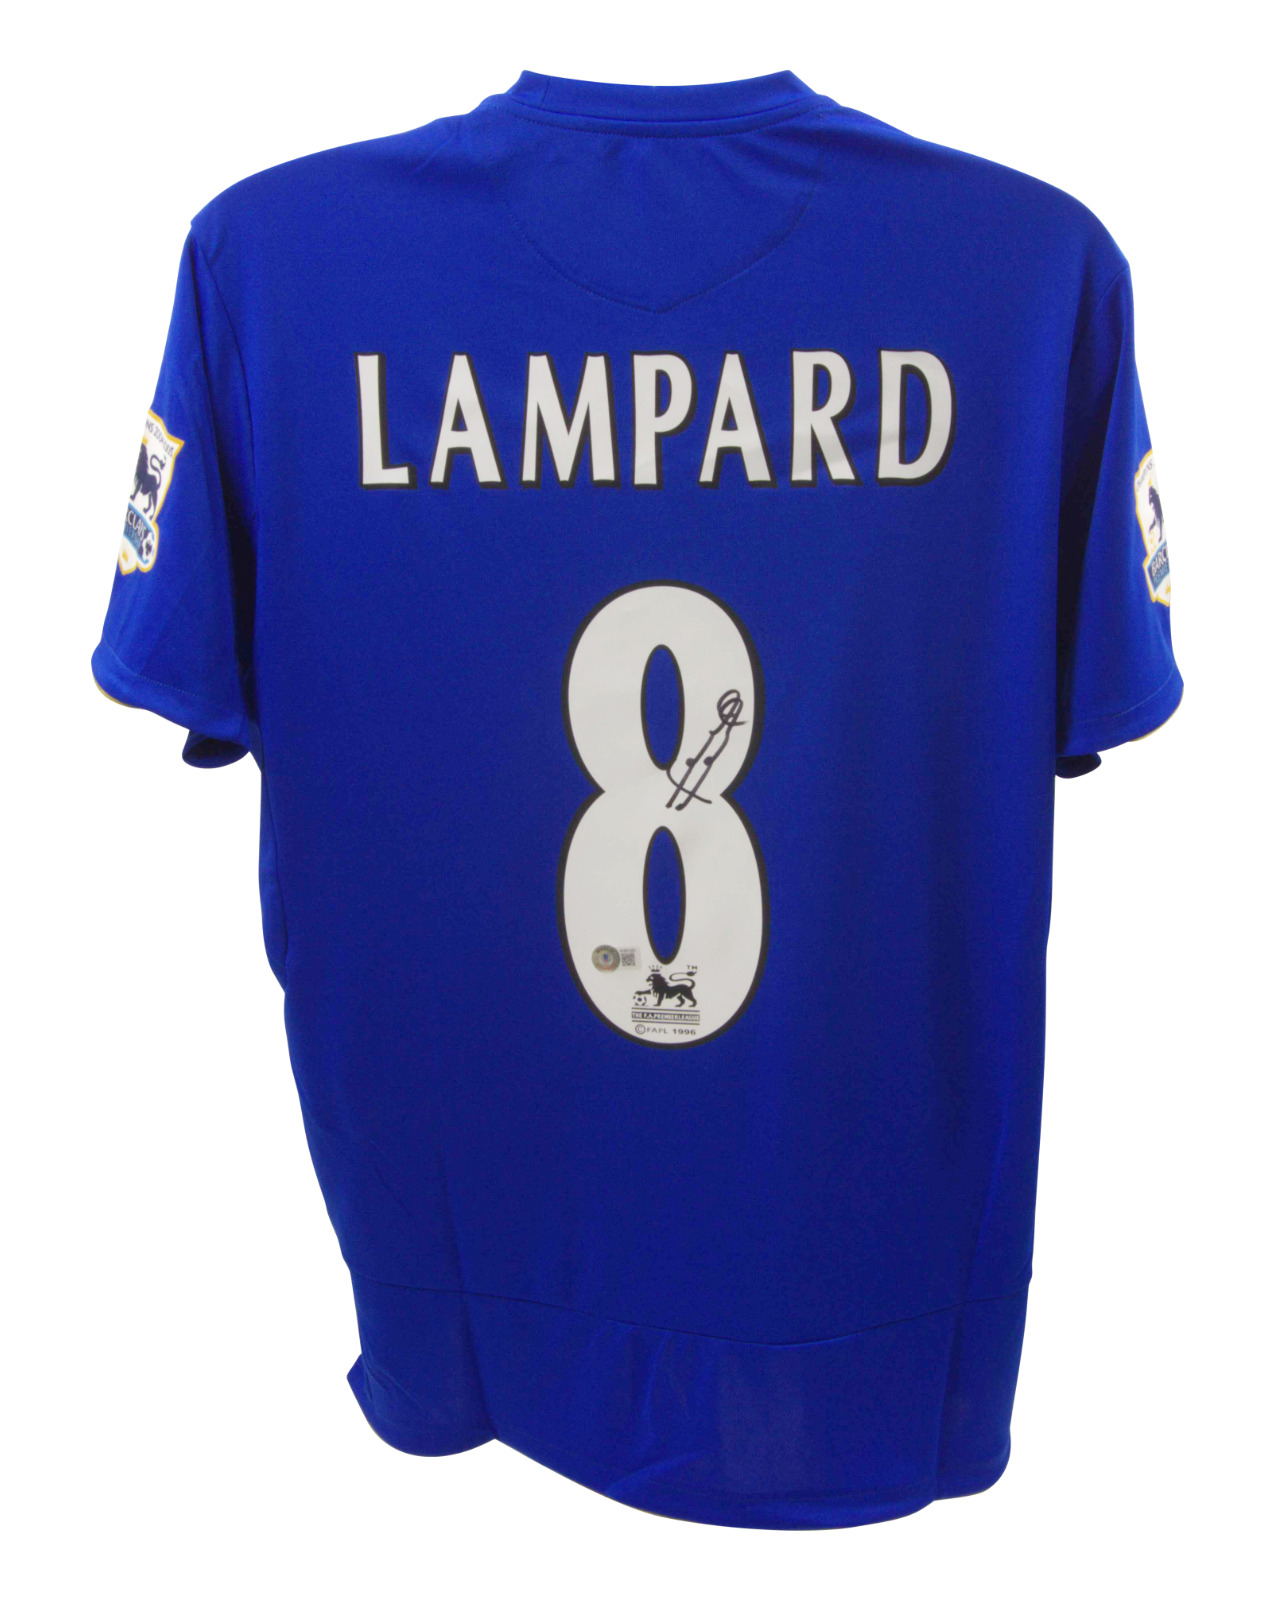 Frank Lampard Signed Chelsea Home Soccer Jersey #8 - Beckett COA